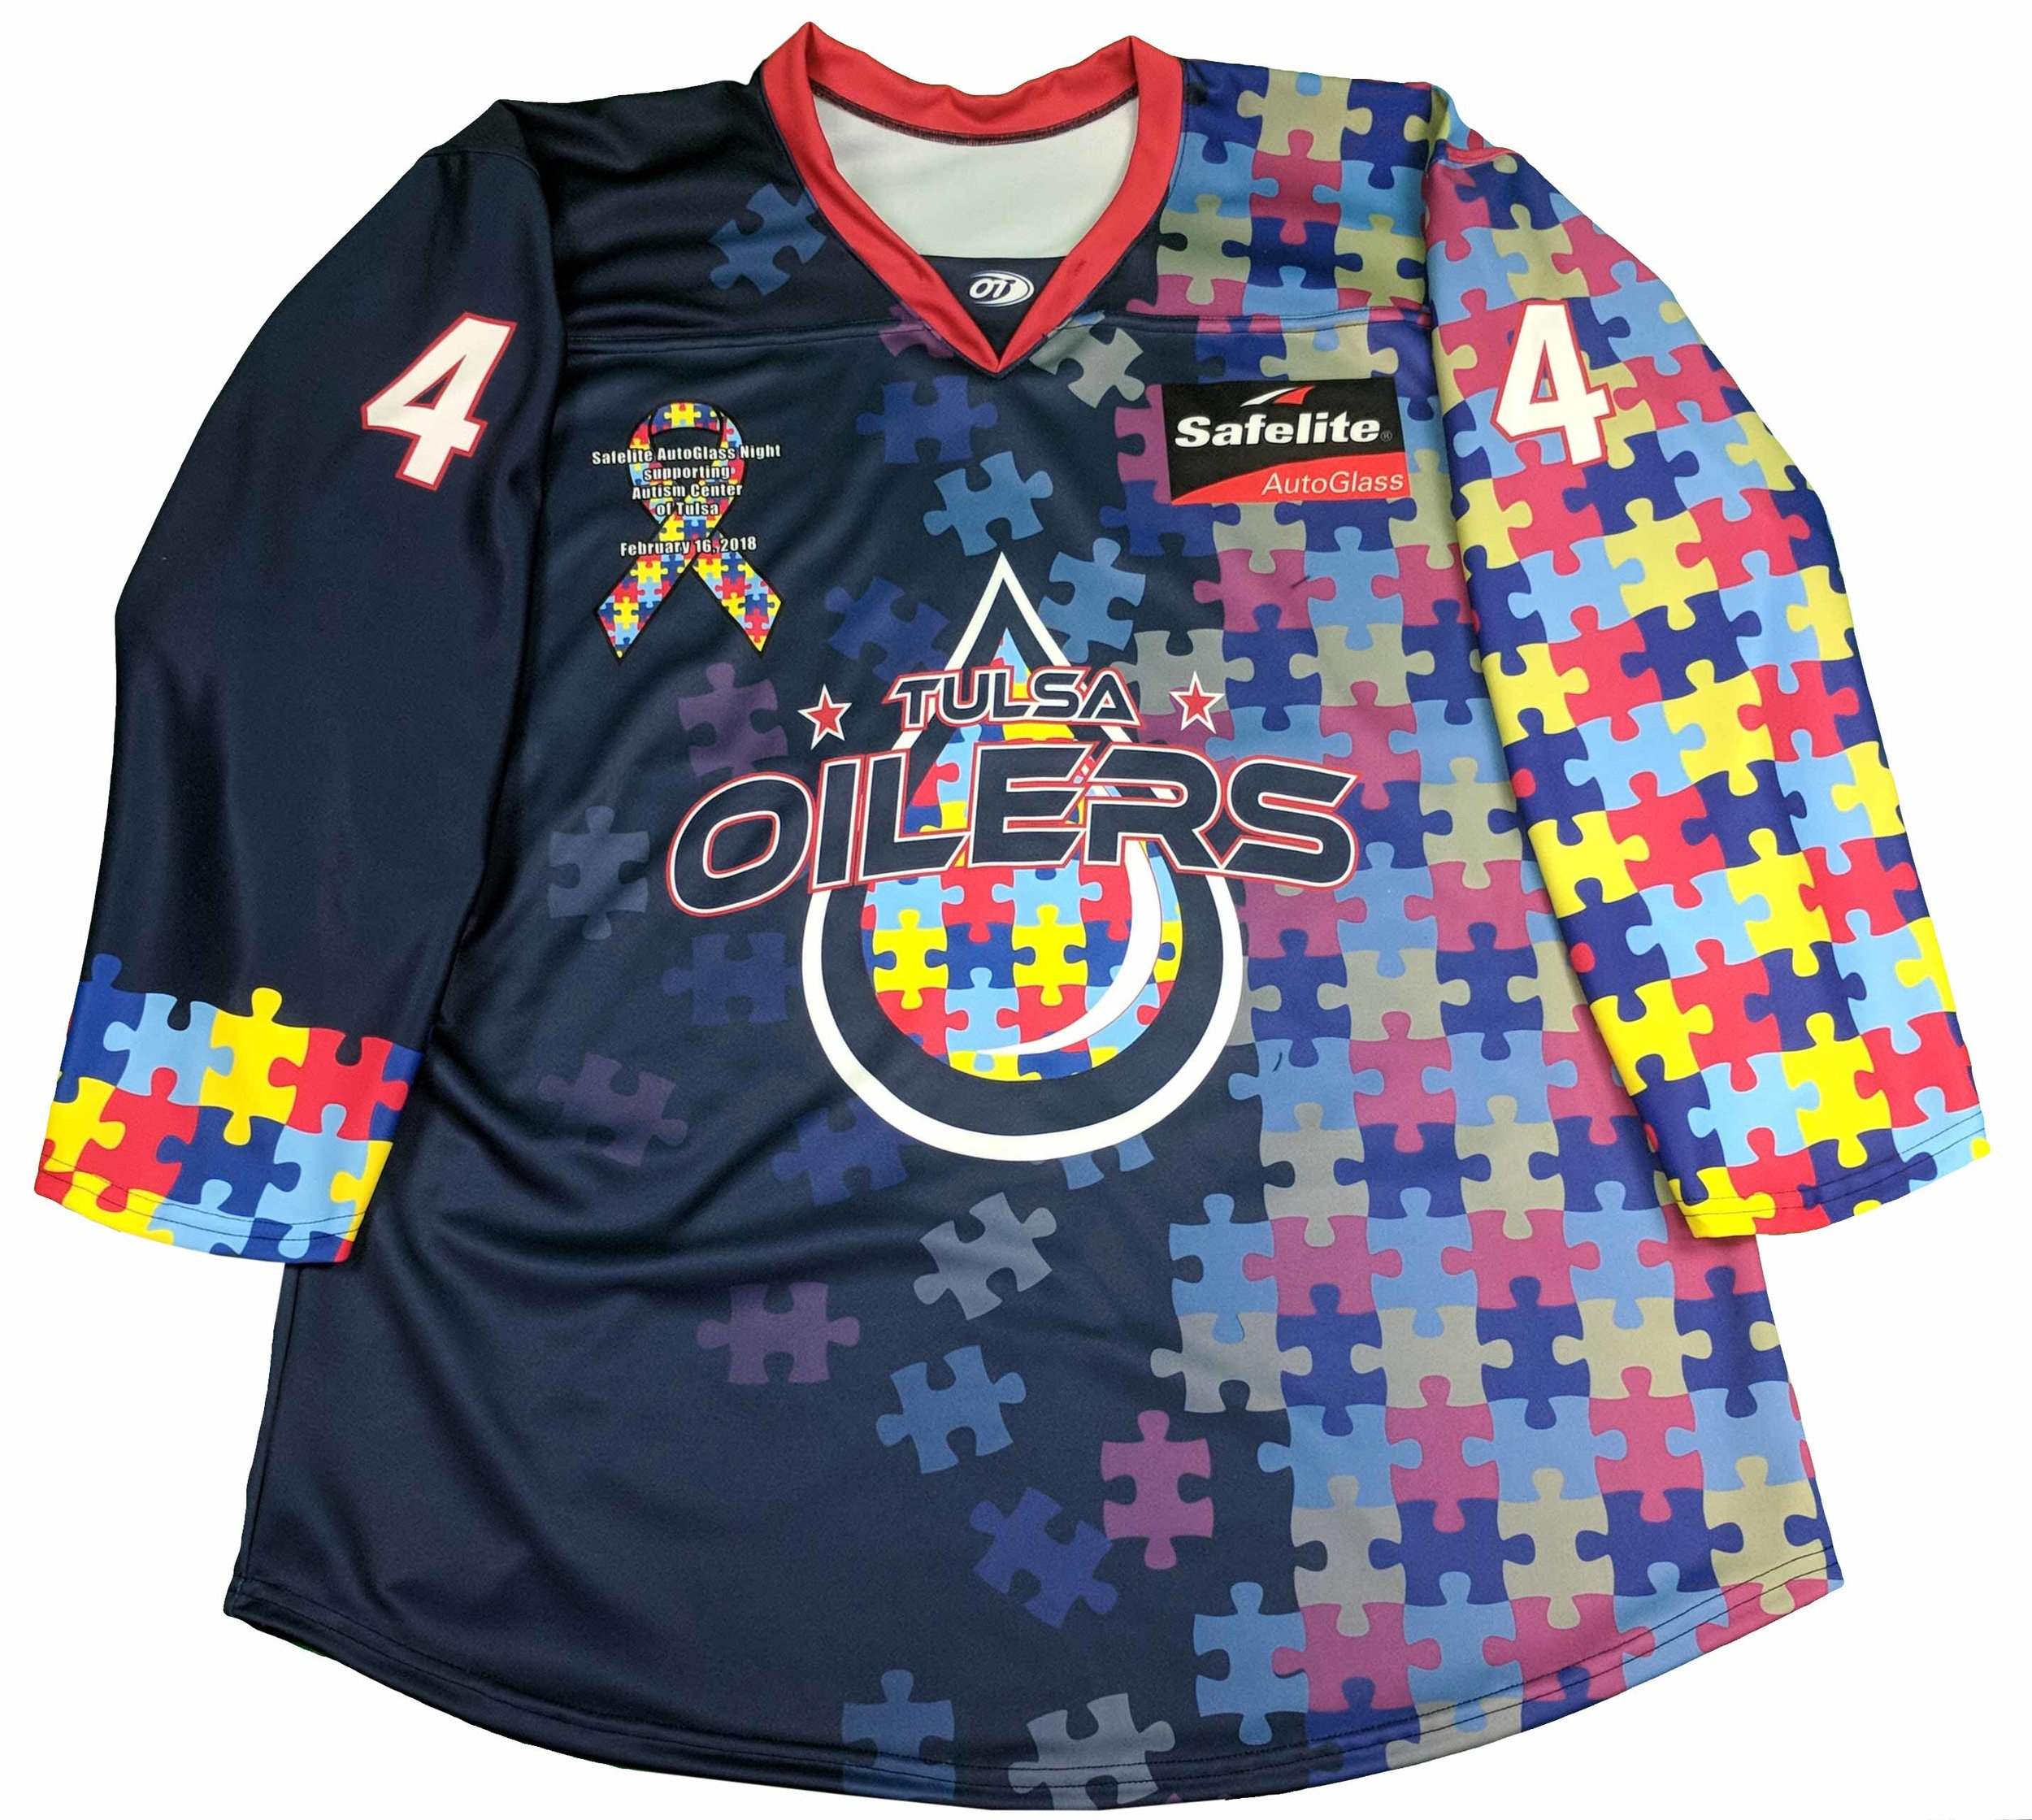 autism hockey jersey